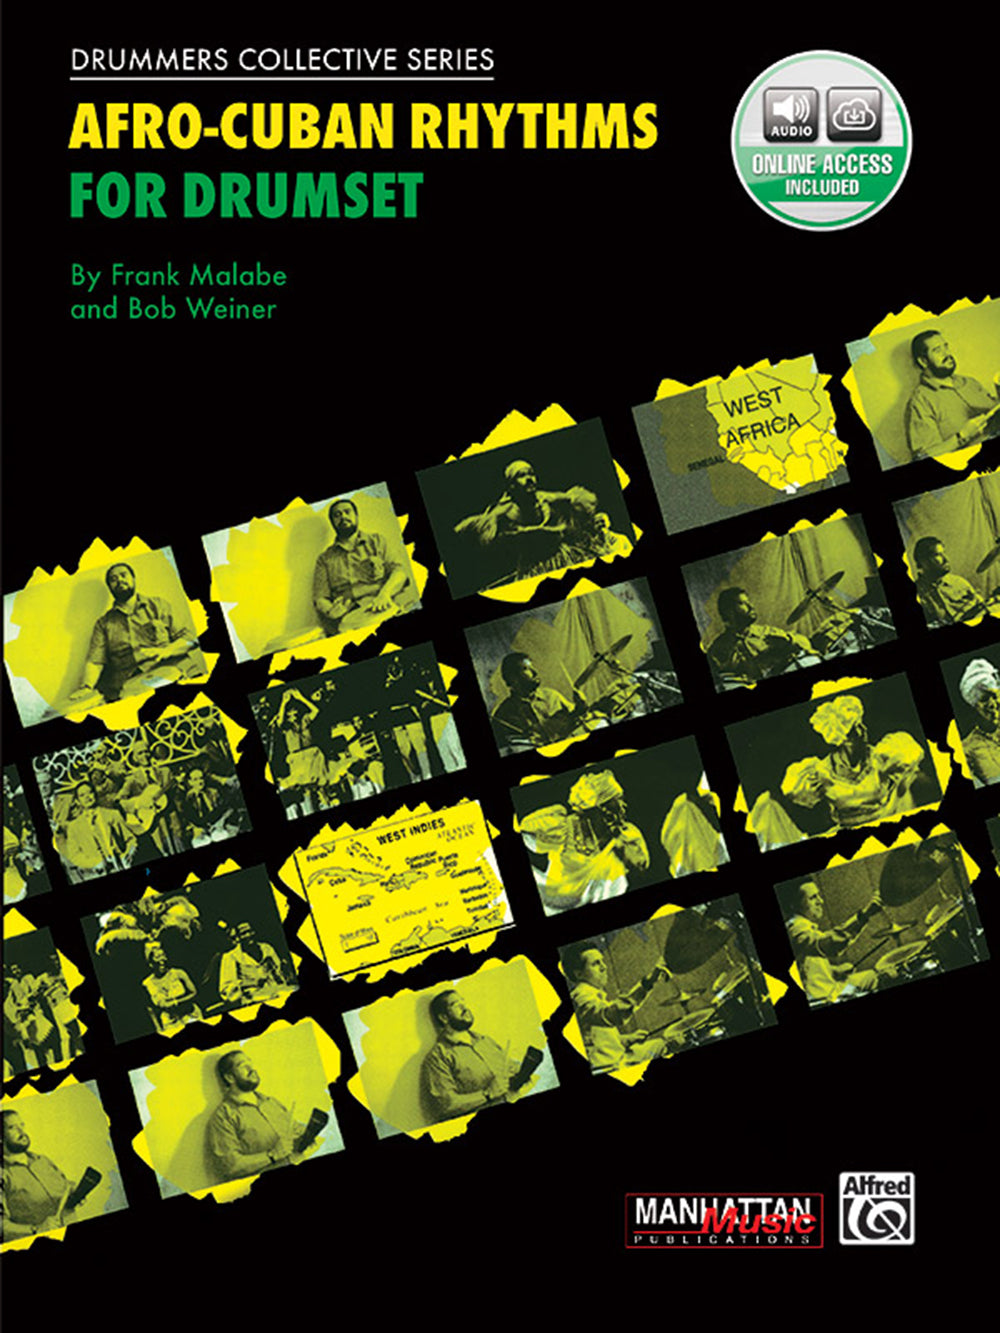 Afro-Cuba Drumset